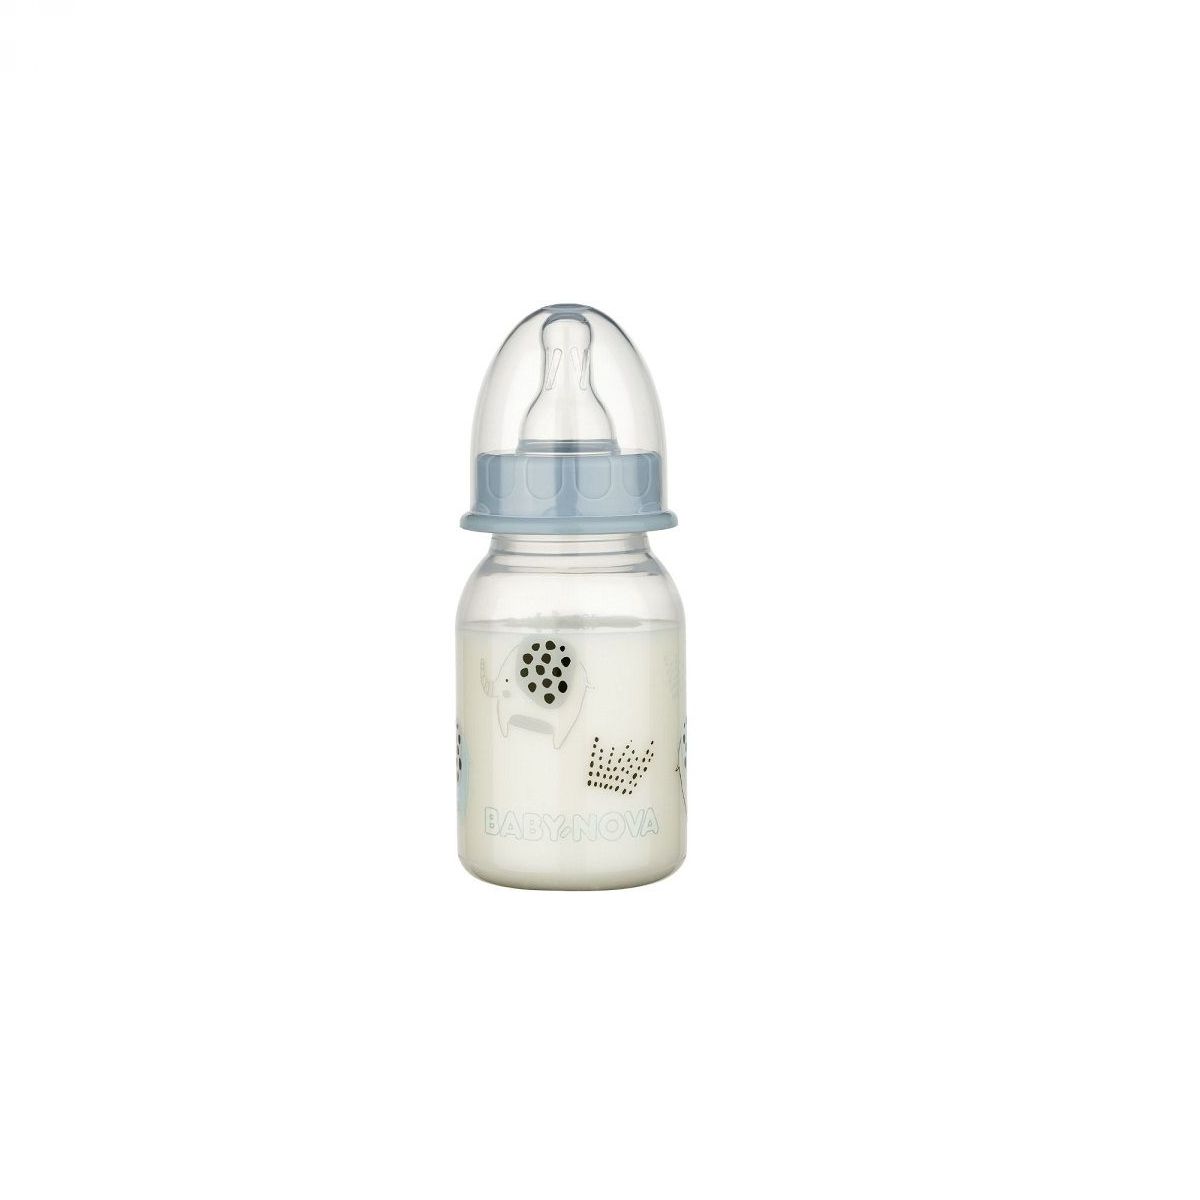 Baby-Nova slon pp steklenicka 120ml